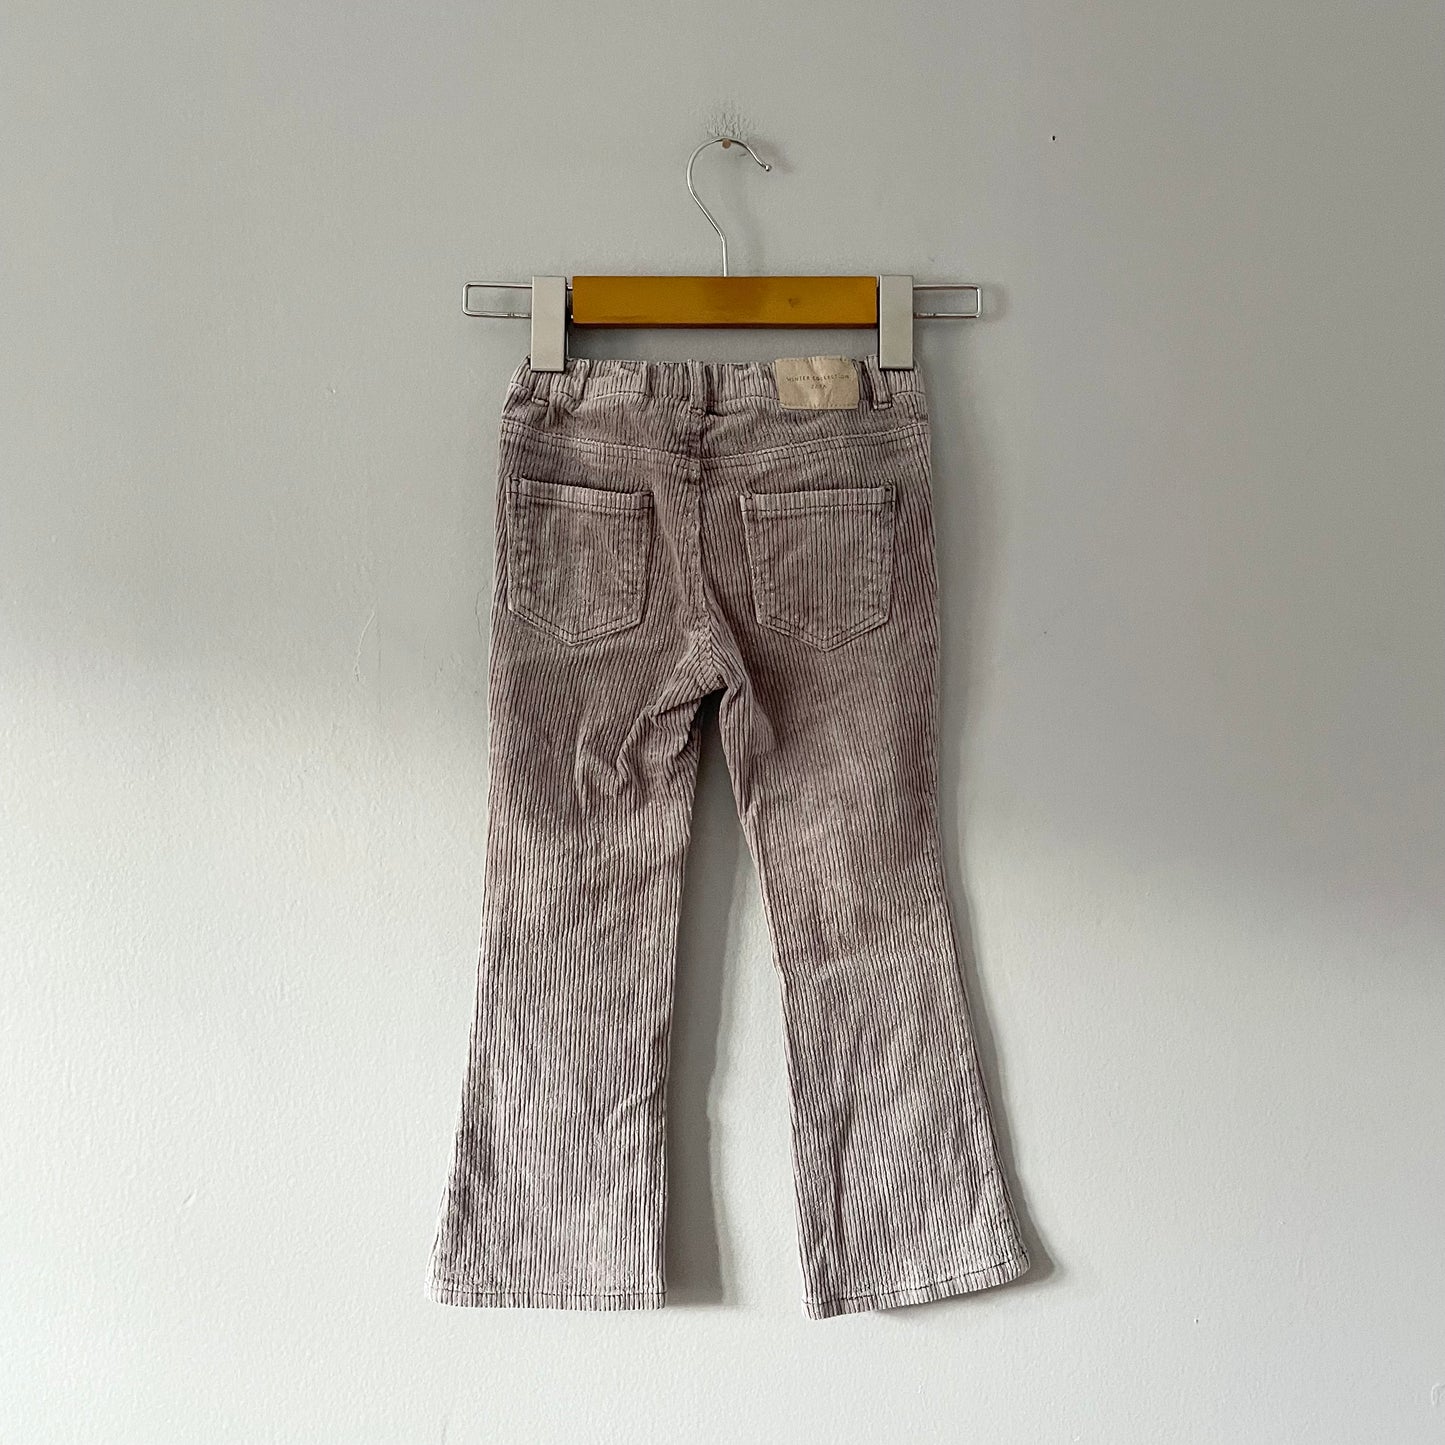 Zara / Light grey stretchy corduroy pants / 4-5Y